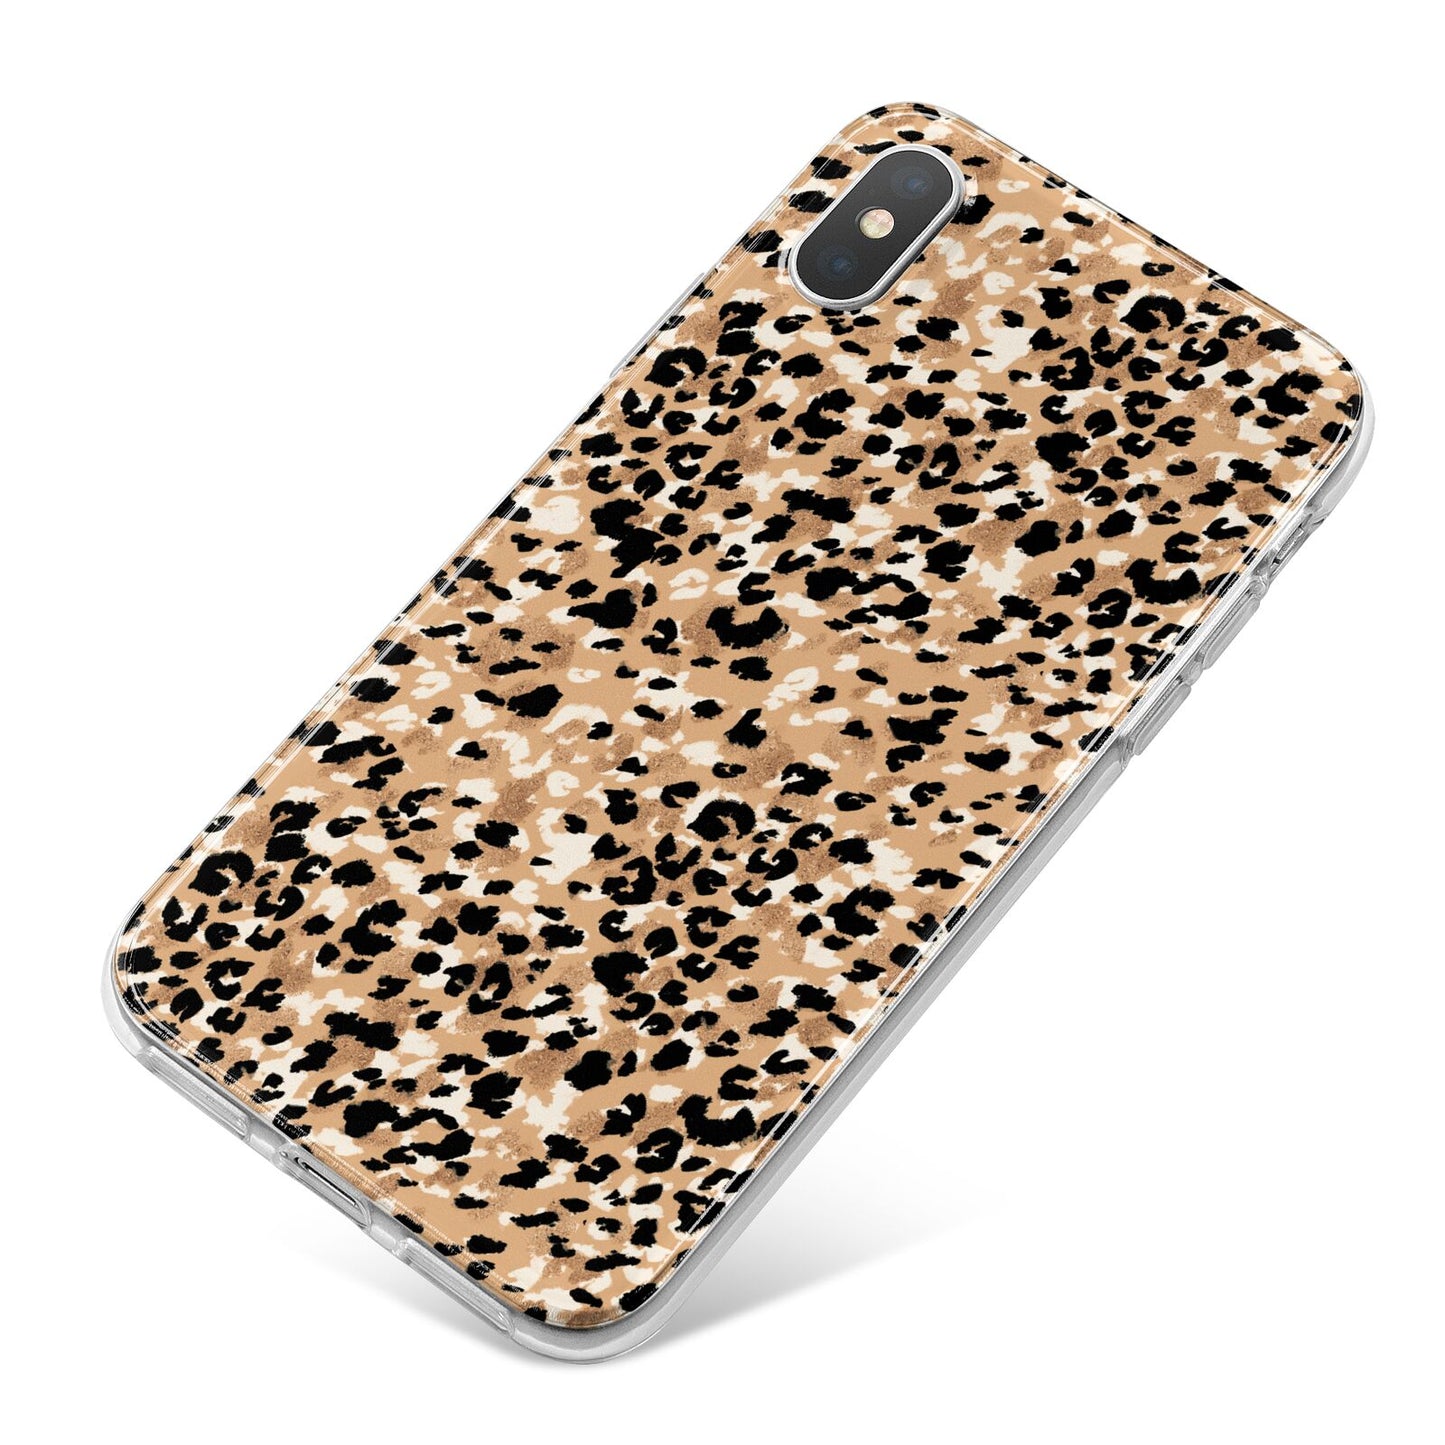 Leopard Print iPhone X Bumper Case on Silver iPhone